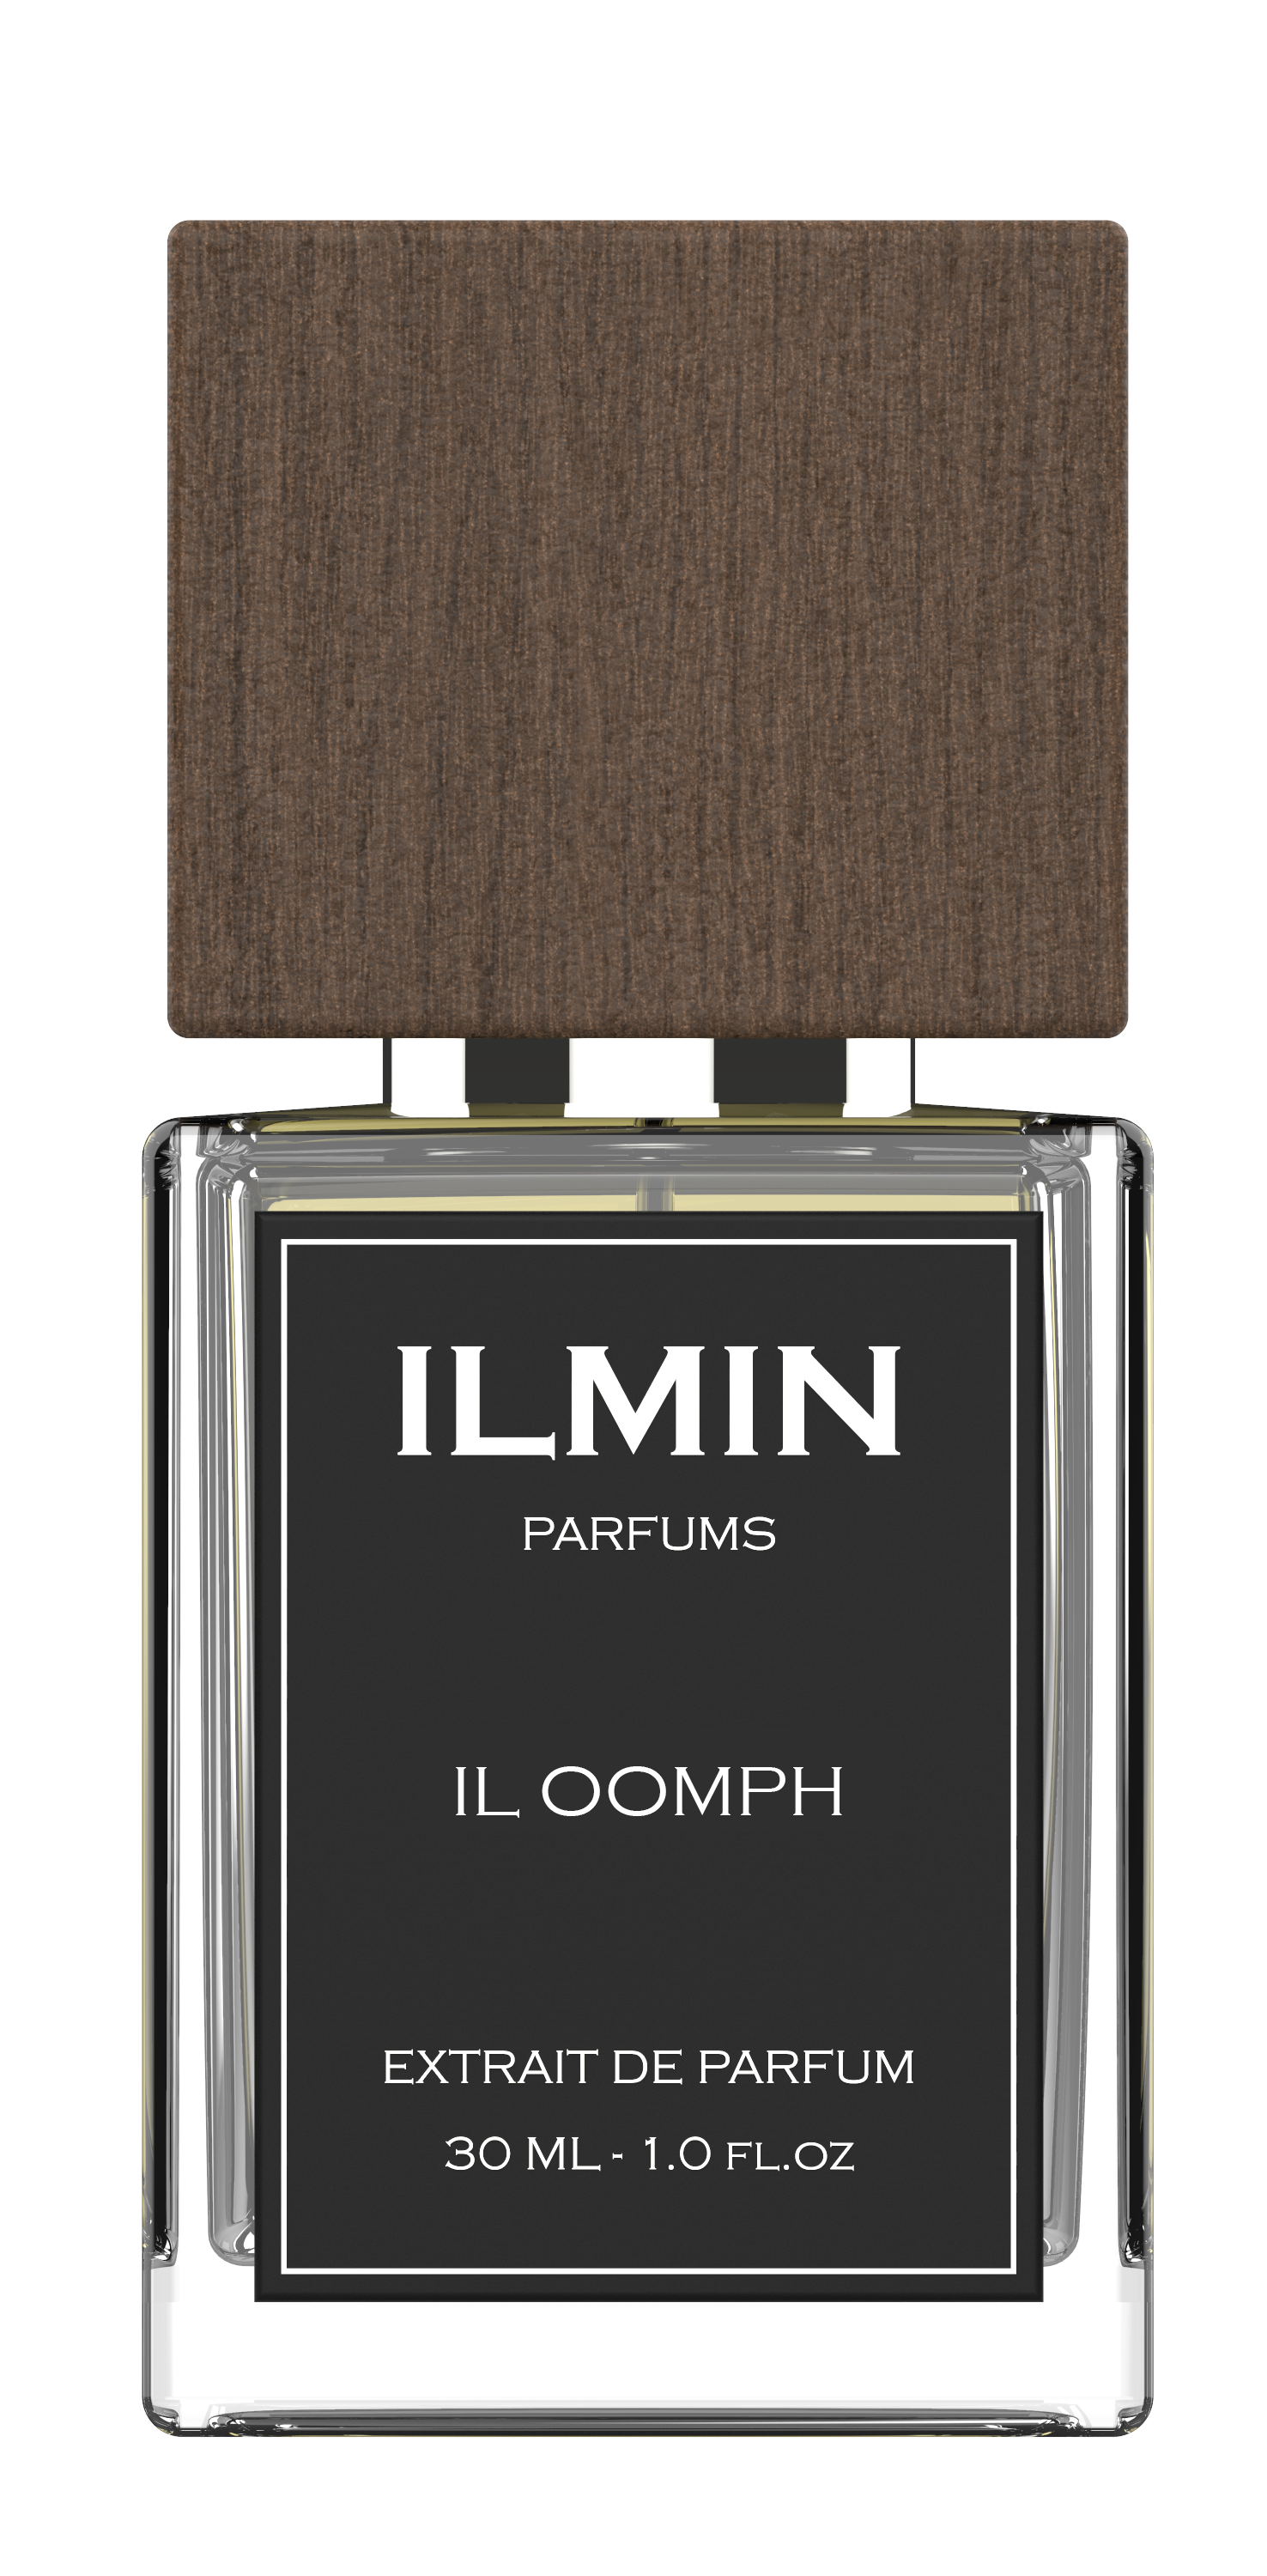 1oz – Parfums Spray Parfum 30ml / ILMIN Extrait OFFICIAL IL OOMPH ILMIN USA De